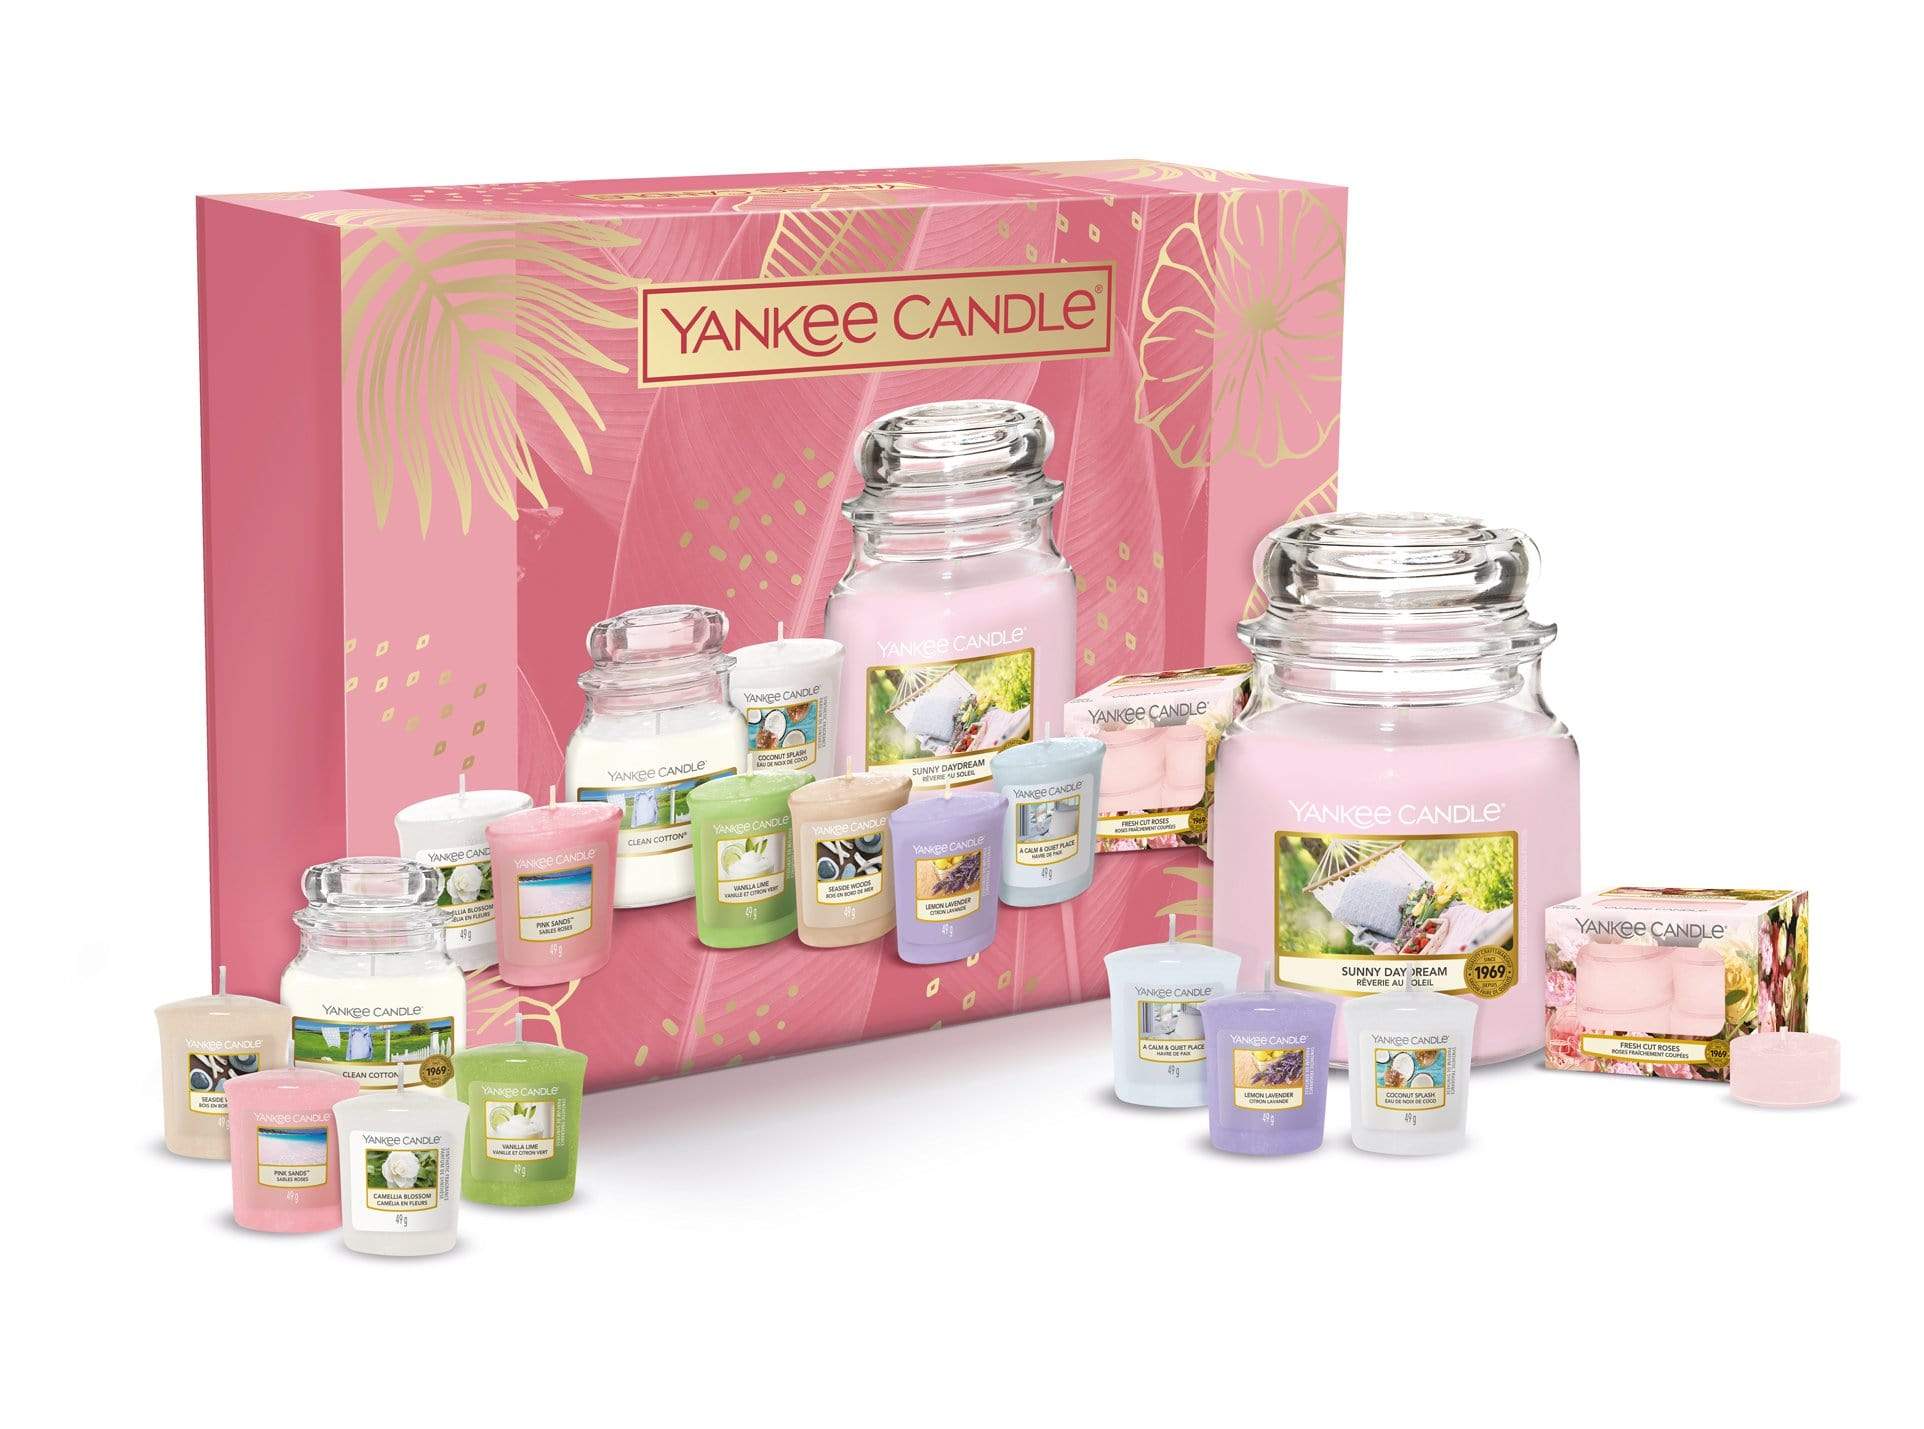 Yankee Candle Yankee Candle Gift Set Yankee Candle Wow Mother's Day Gift Set - 1 Medium Jar, 1 Small Jar, 7 Votives & 12 Tea Lights